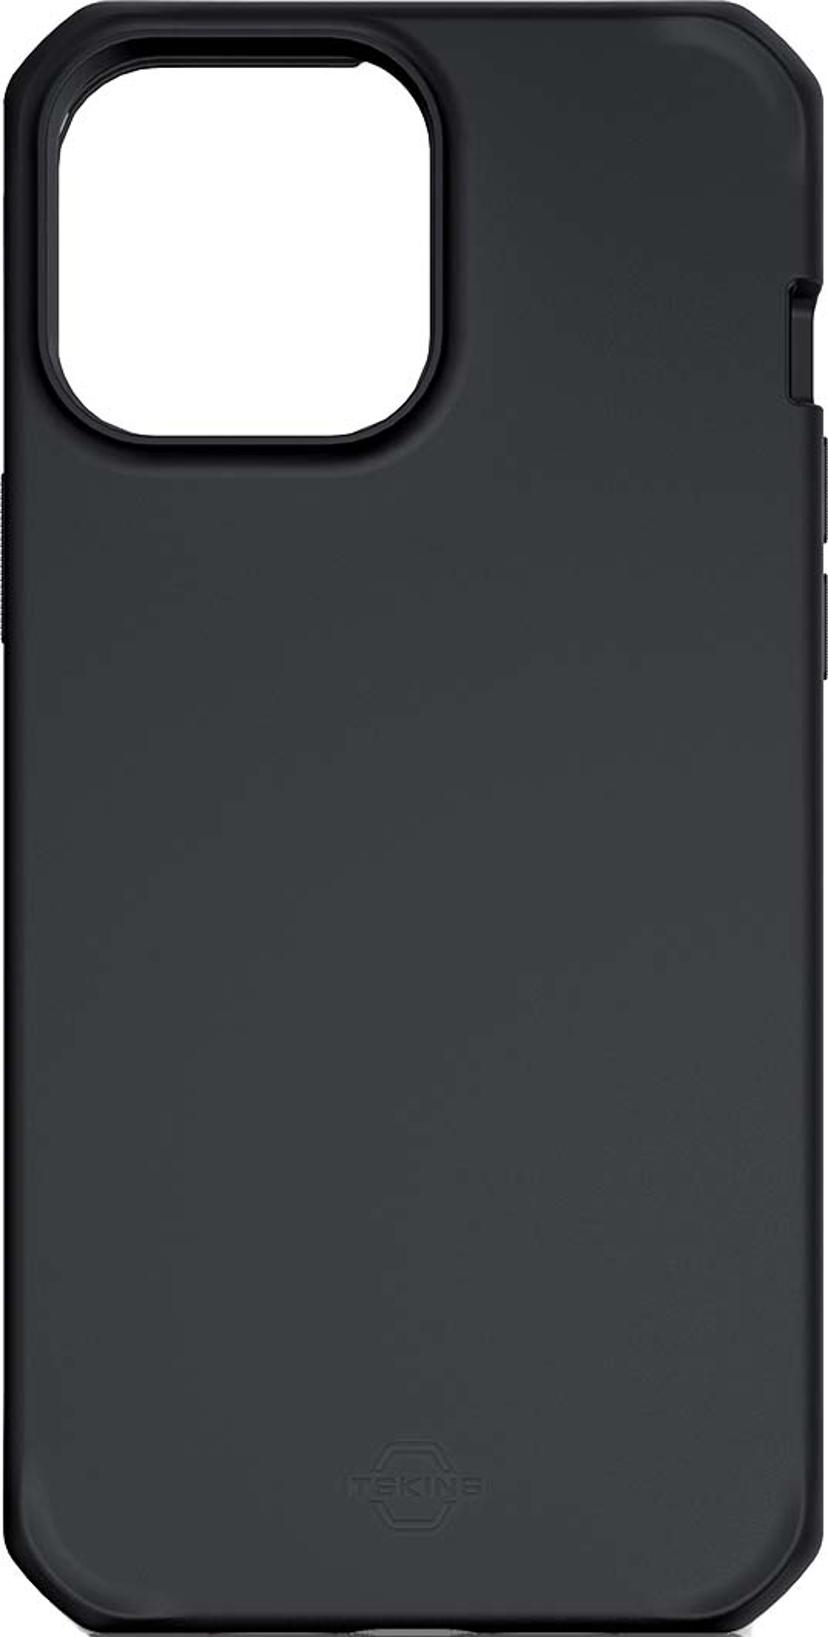 Cirafon Spectrum Solid Black Iphone12/13 Max 6.7" 2020 D54p iPhone 12 Pro Max, iPhone 13 Pro Max Musta